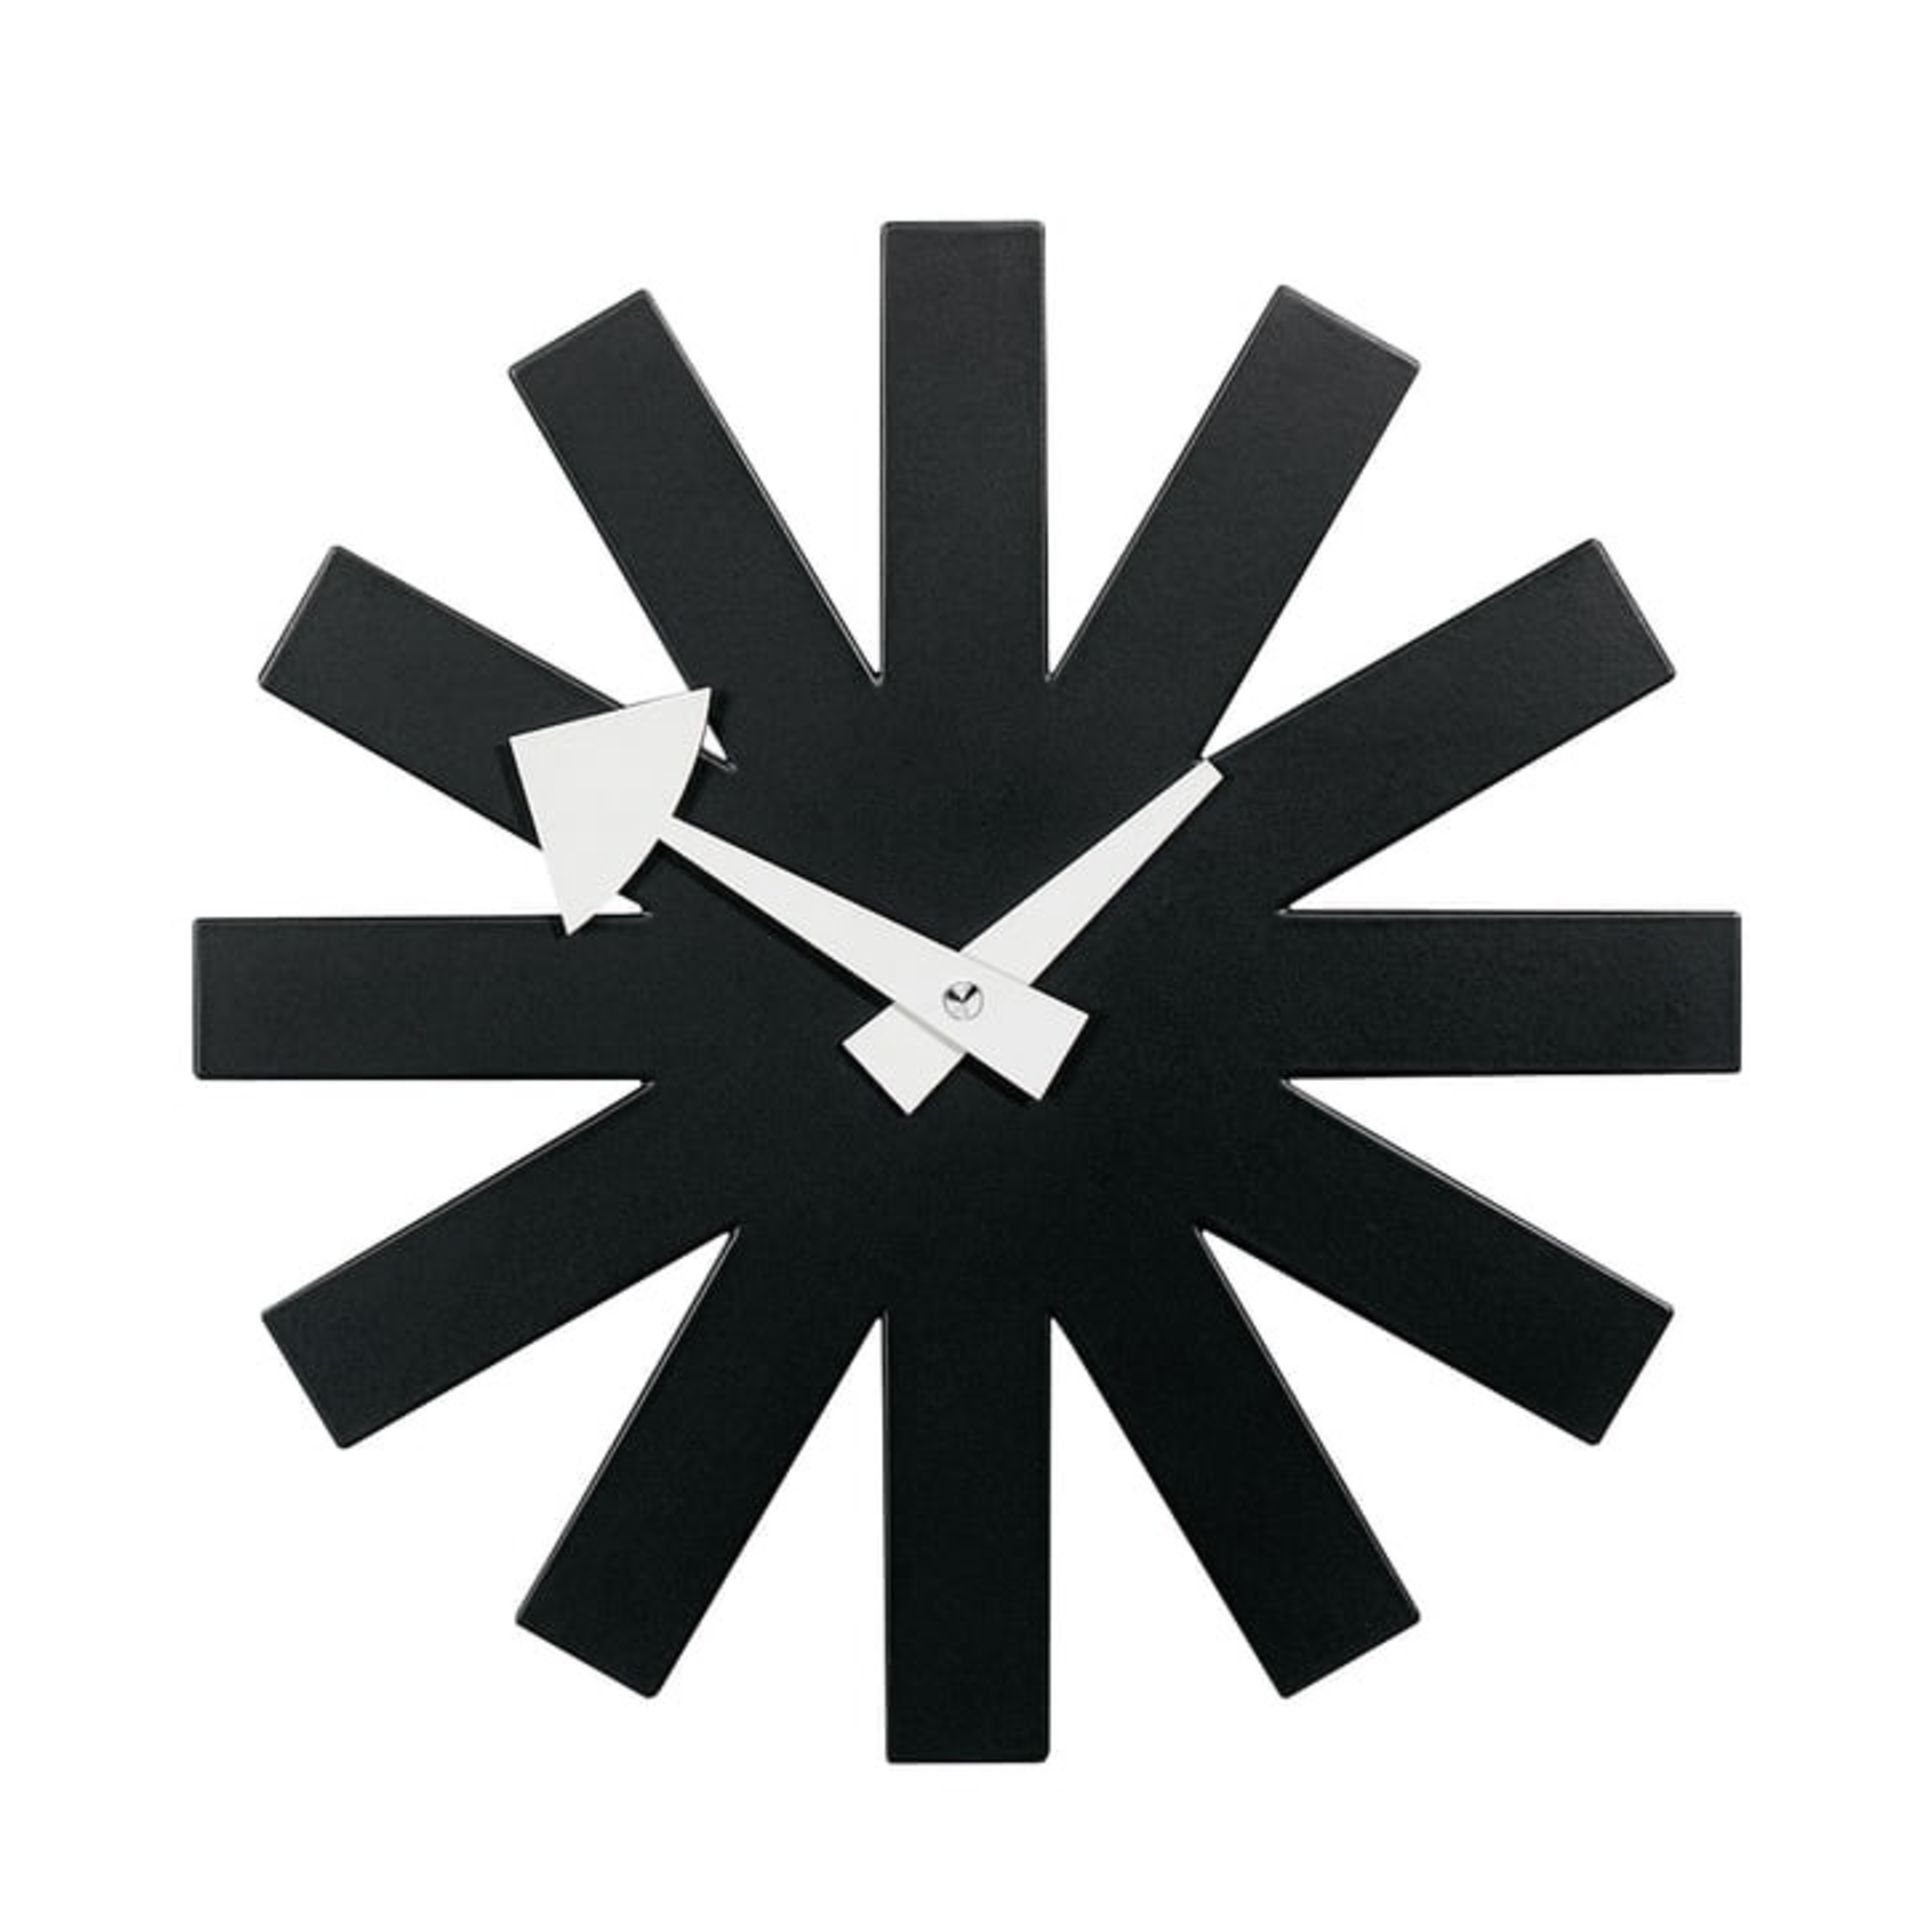 1 x George Nelson Inspired Black Asterisk Clock - 25cm Diameter - Brand New Boxed Stock